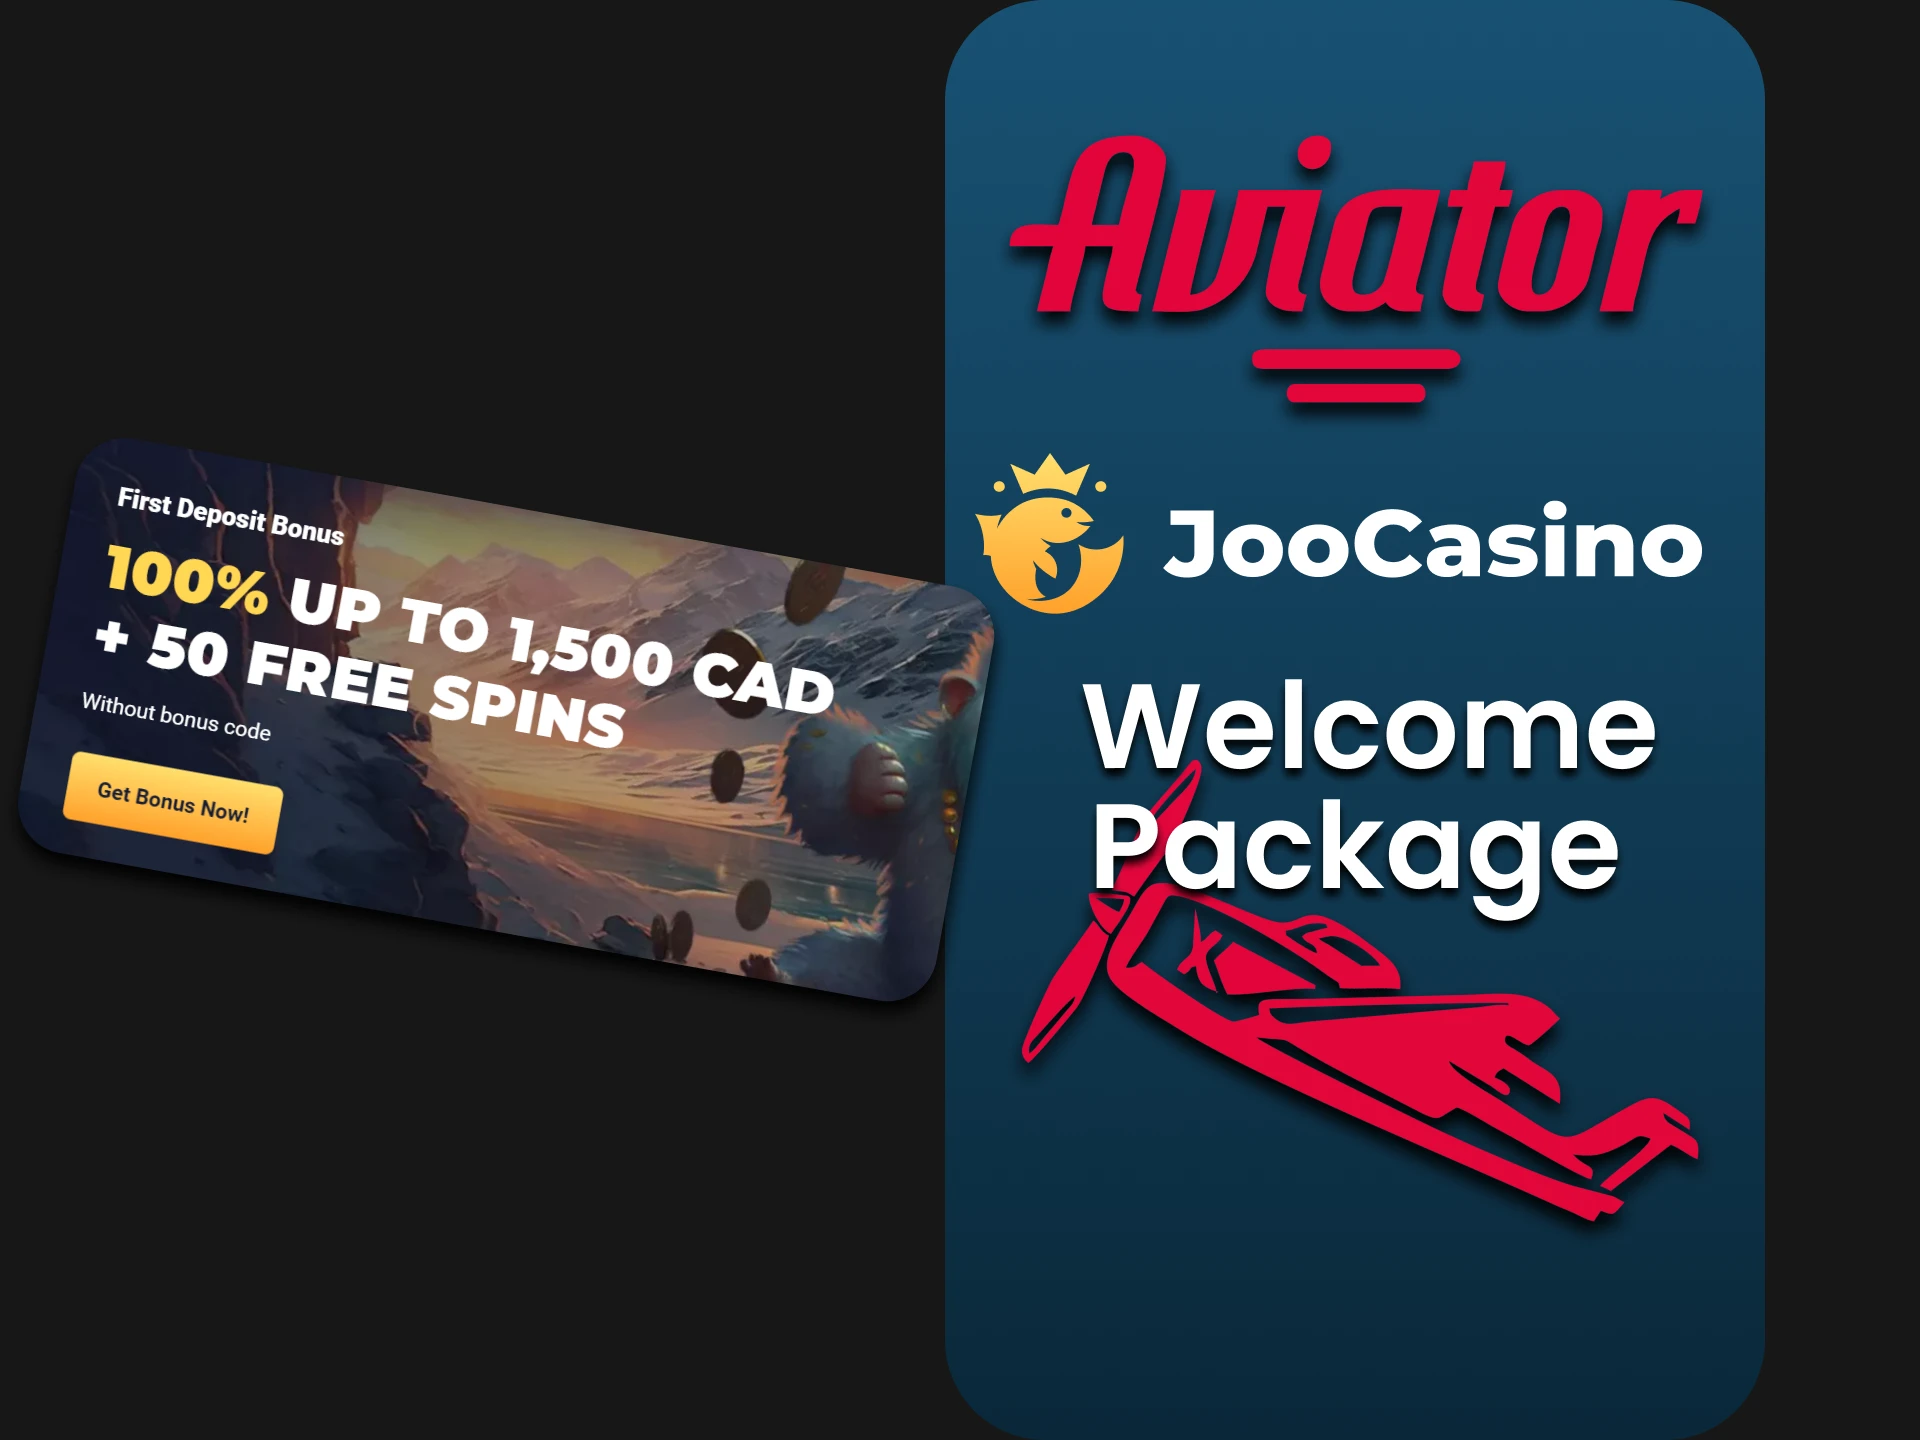 Joo Casino is giving a welcome bonus to the Aviator.